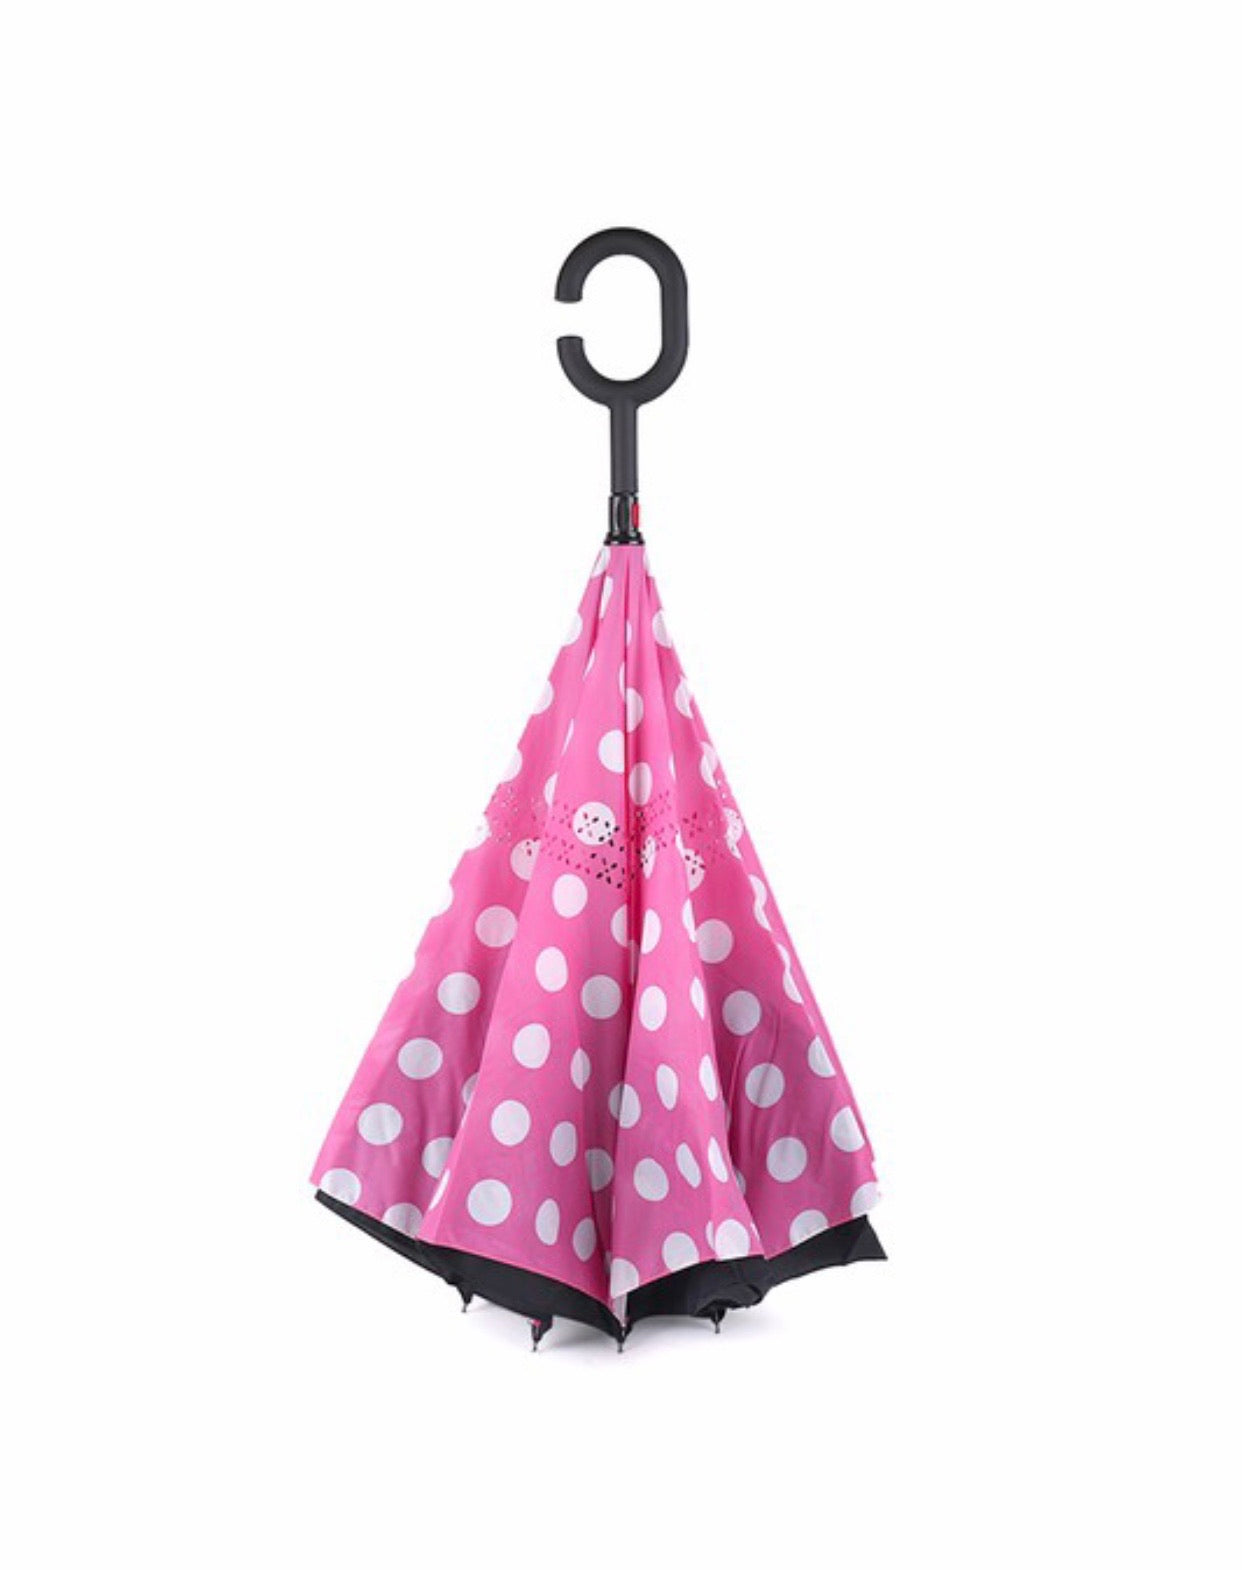 Pink polka dot umbrella - Alexa Maries